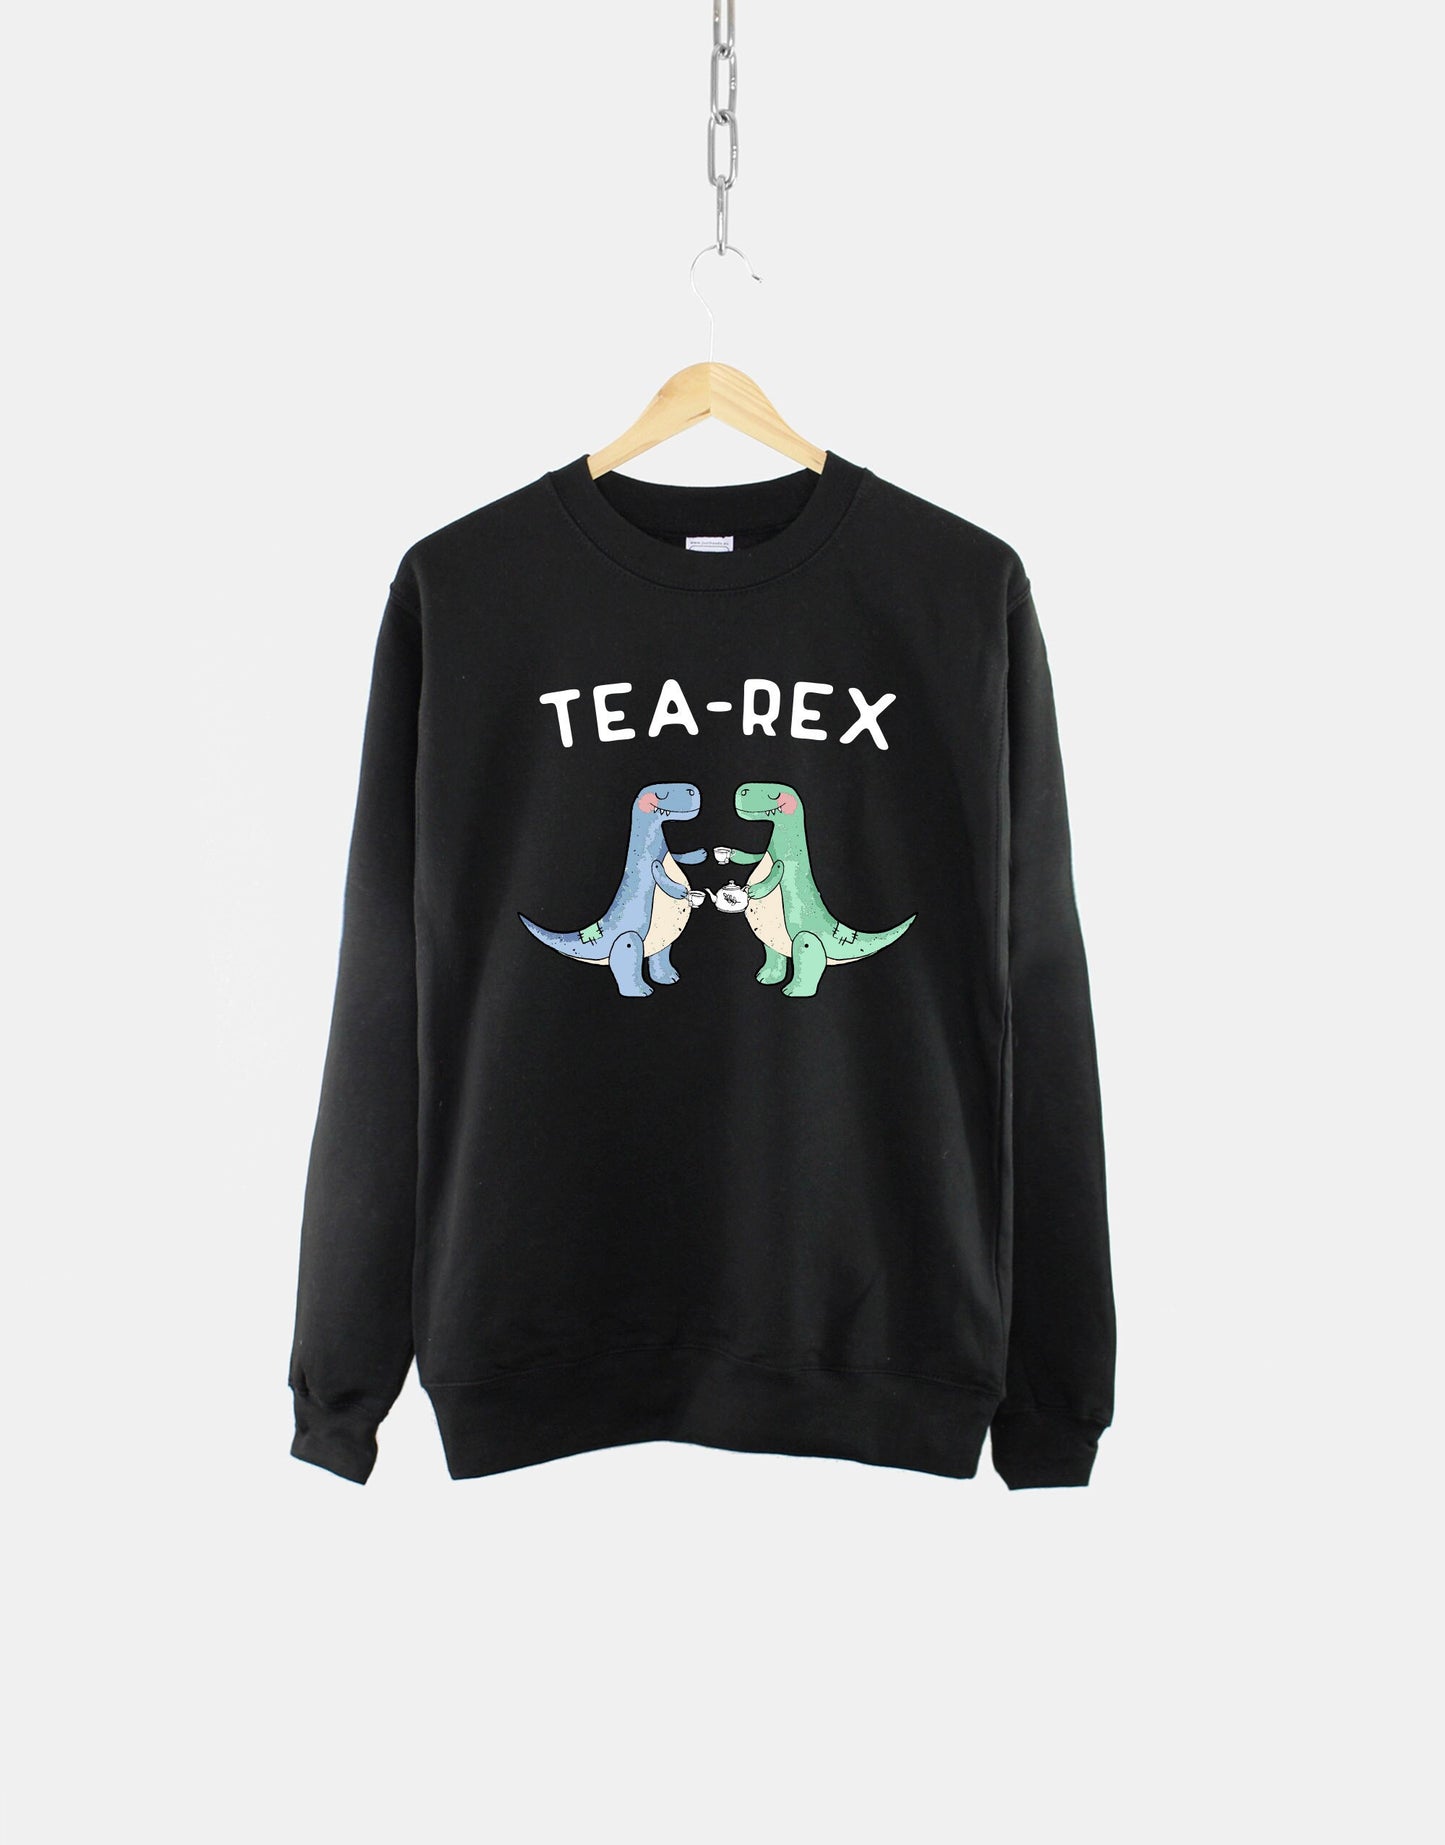 Tea-Rex Sweatshirt - Tea Rex Sweatshirt - Cute Dinosaur Sweatshirt - Tyrannosaurus Rex Tea Sweatshirt - Tea Rex Dinosaur Sweater